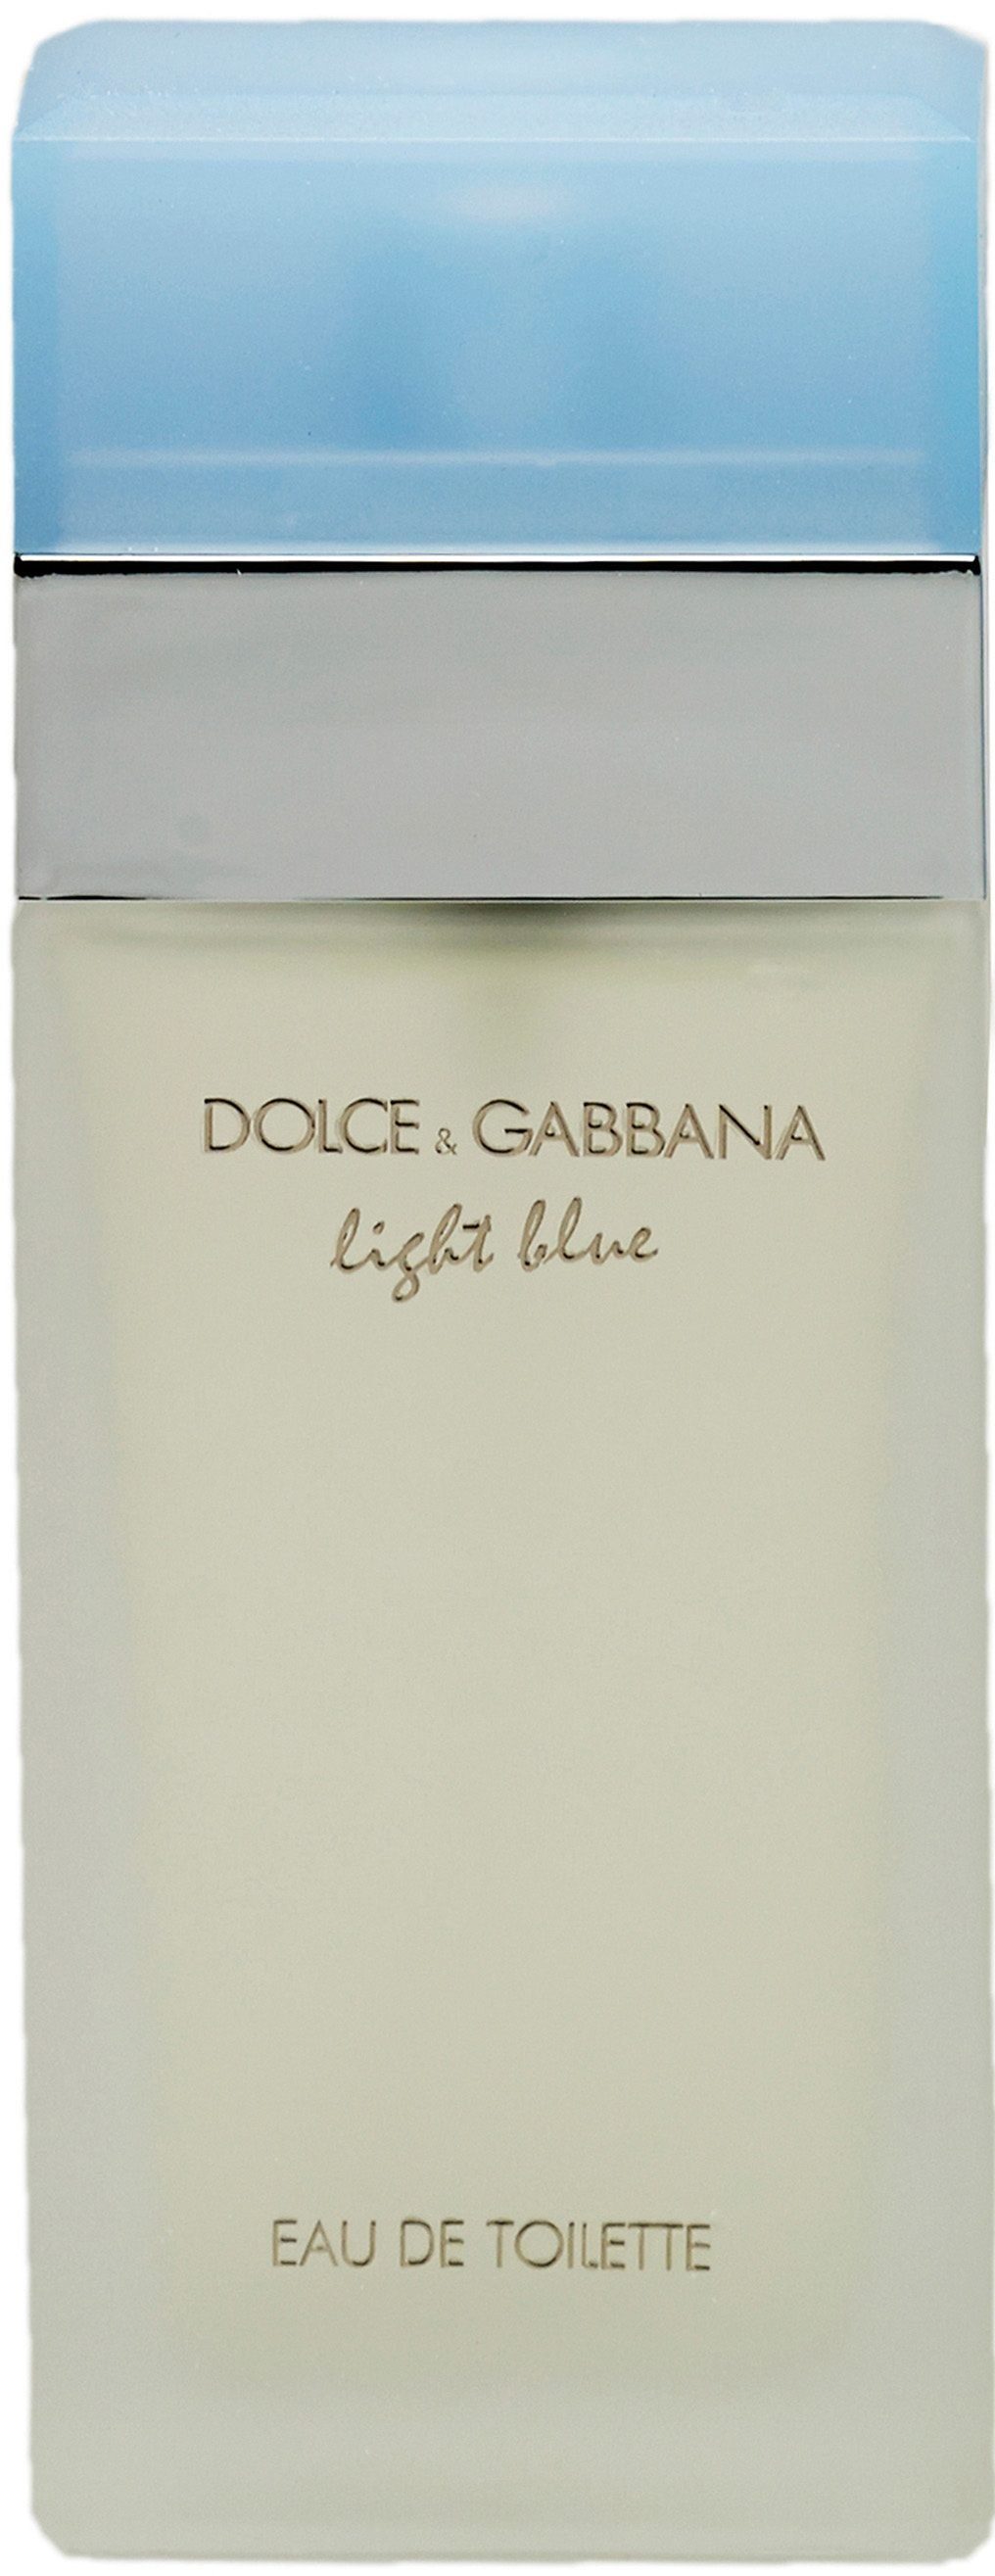 DOLCE & GABBANA Eau de Toilette Light Blue, EdT for her, mediterraner Duft, Parfum im Zerstäuber